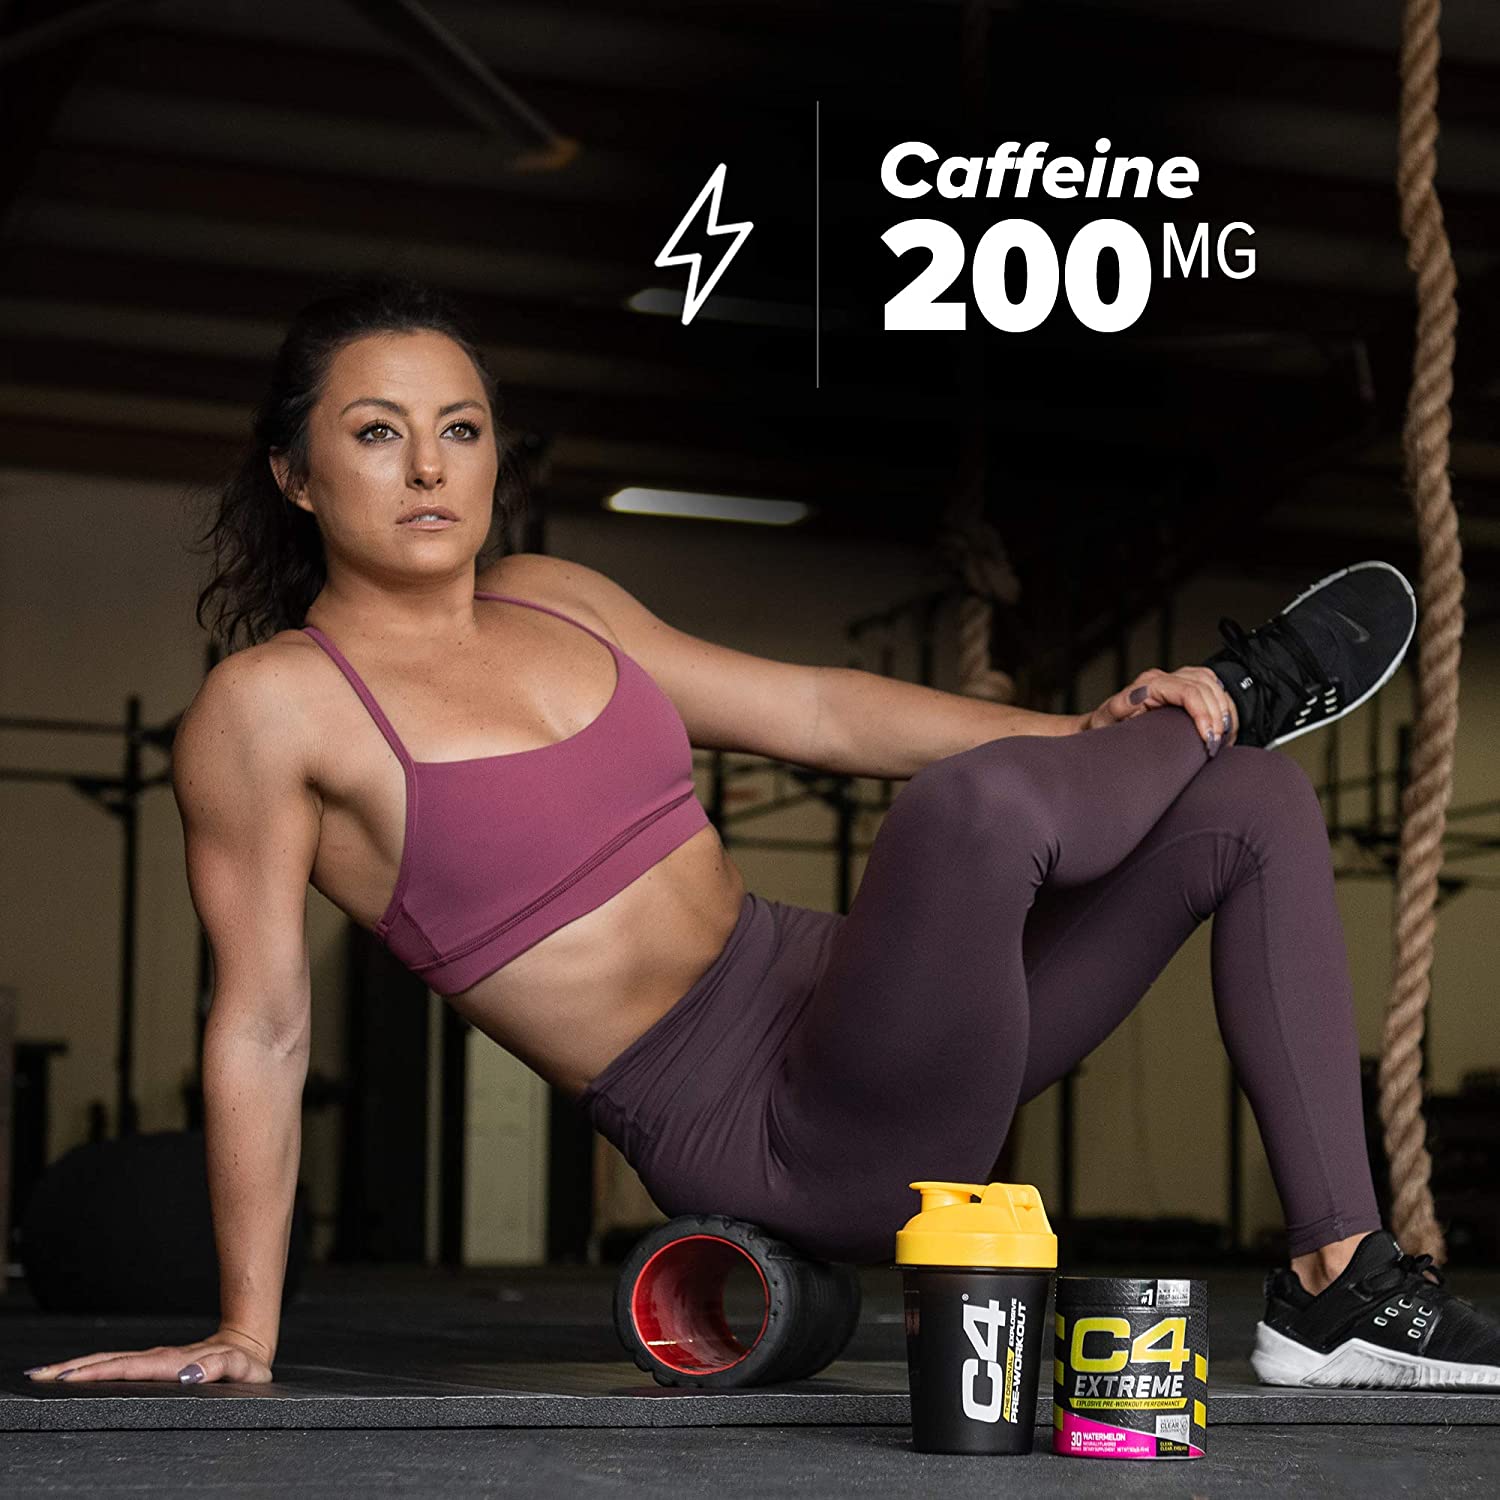 c4 extreme powder - 200mg caffeine